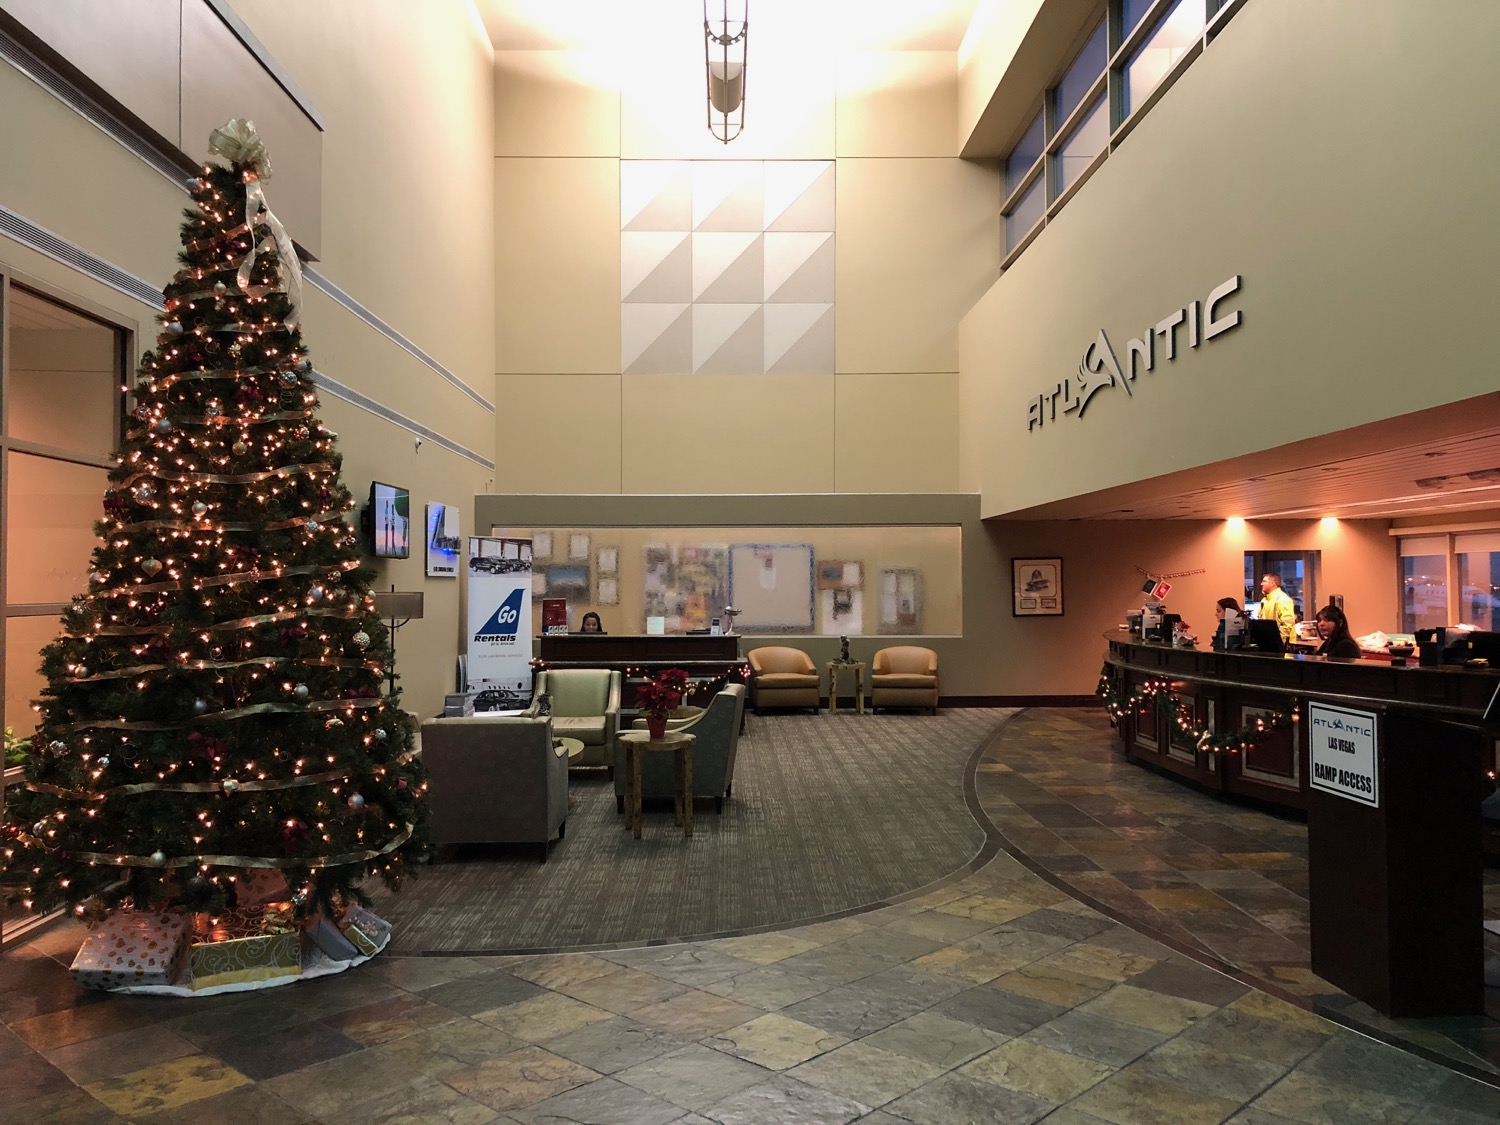 a christmas tree in a lobby